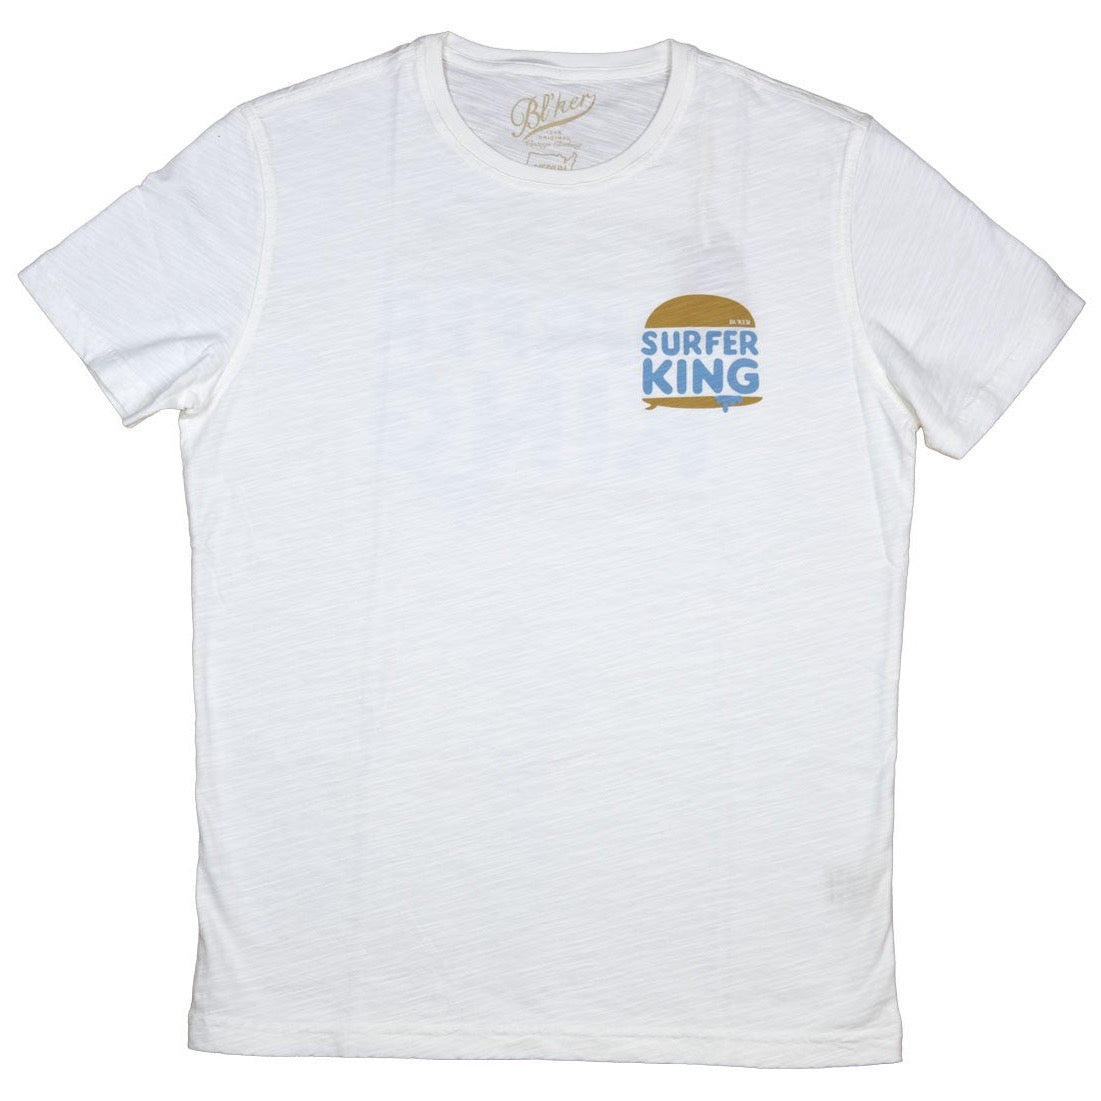 T-shirt cotone "Surfer King" BL'KER